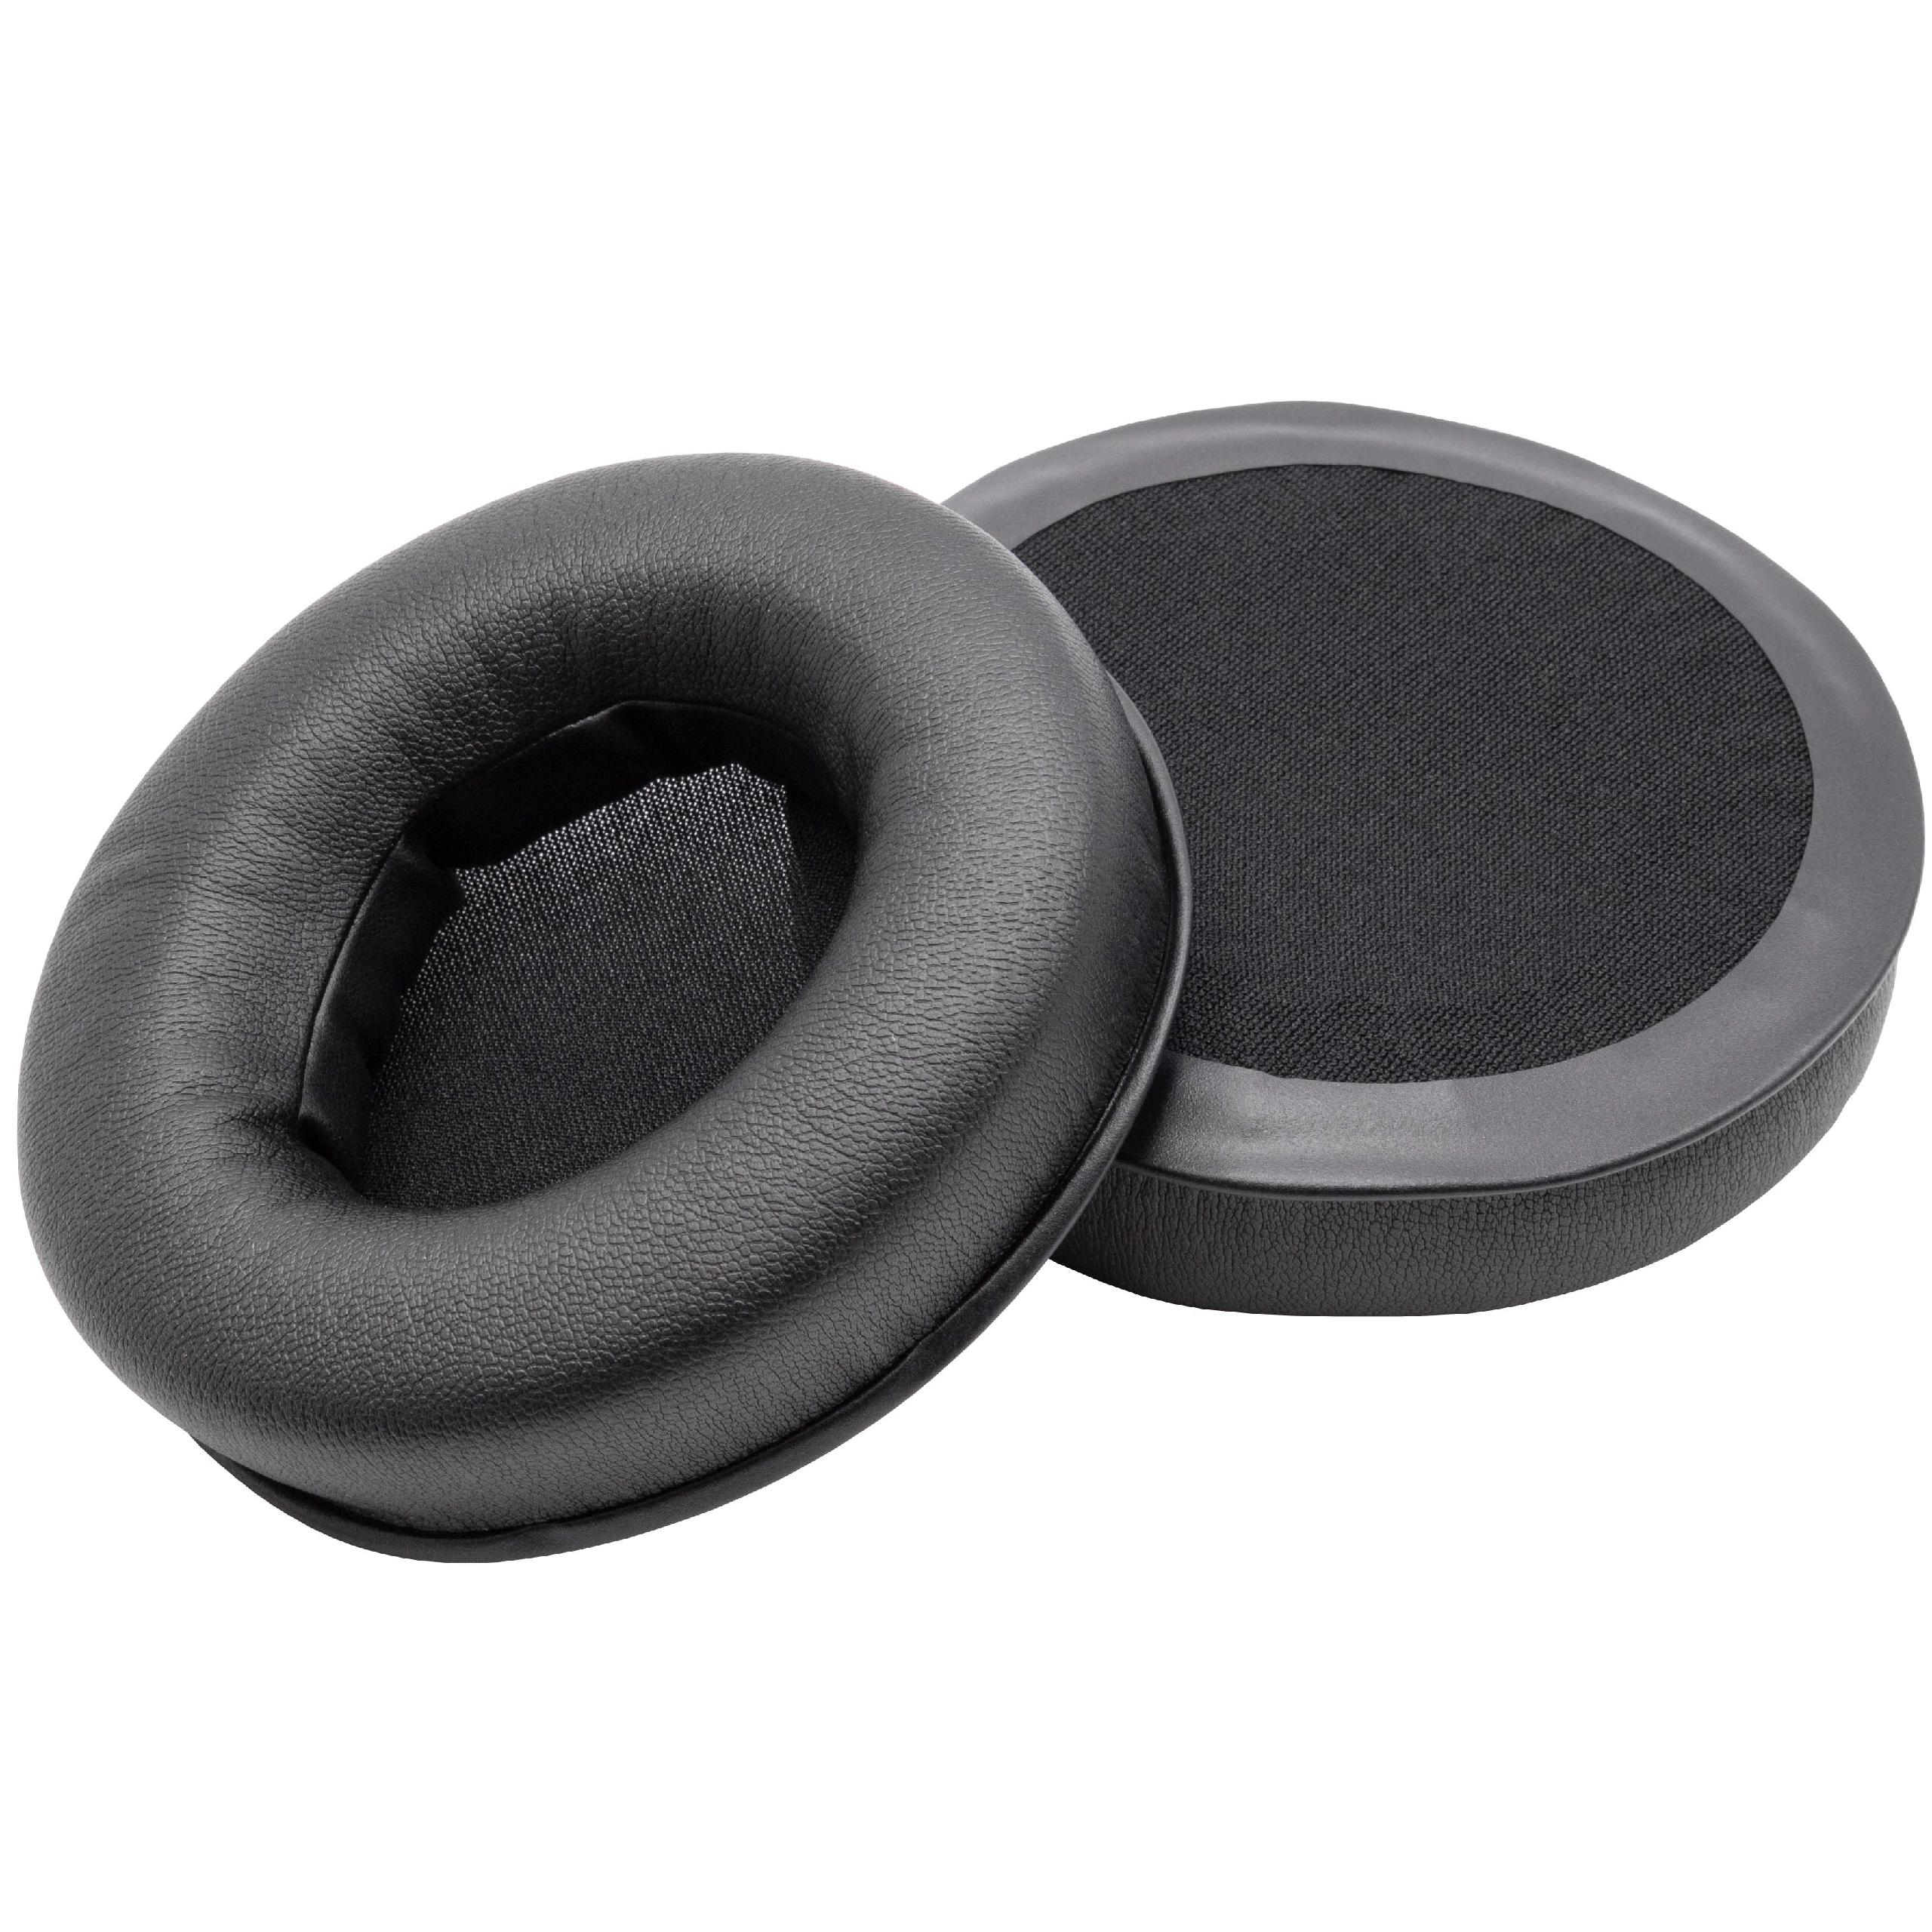 Ear Pads suitable for Razer Kraken Headphones etc. - polyurethane / foam, 8.7 cm External Diameter